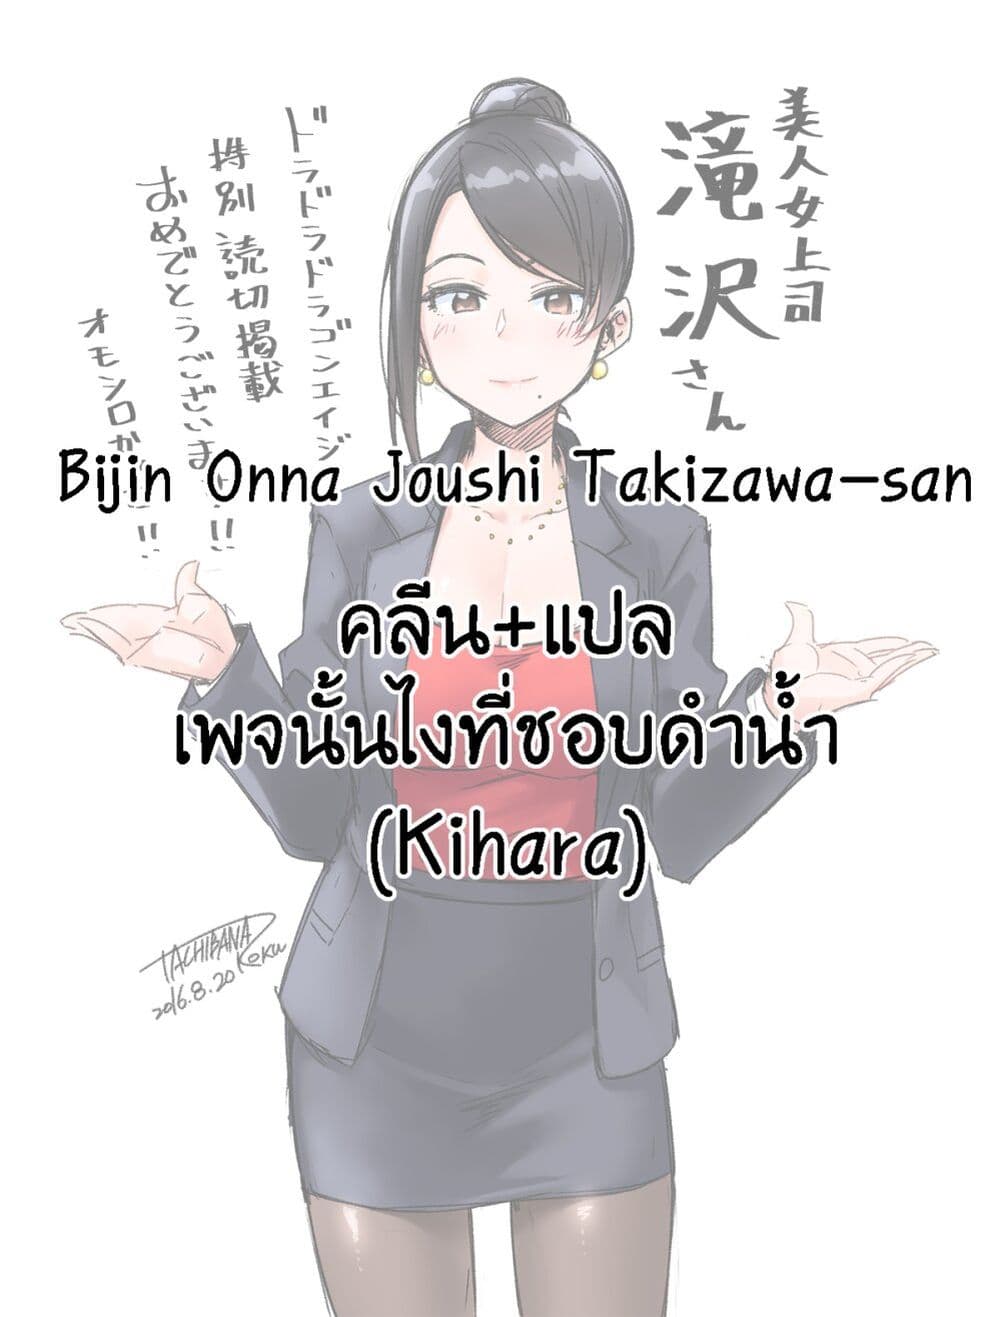 Bijin Onna Joushi Takizawa-san หัวหน้าสุดสวย ทากิซาวะซัง 15-15